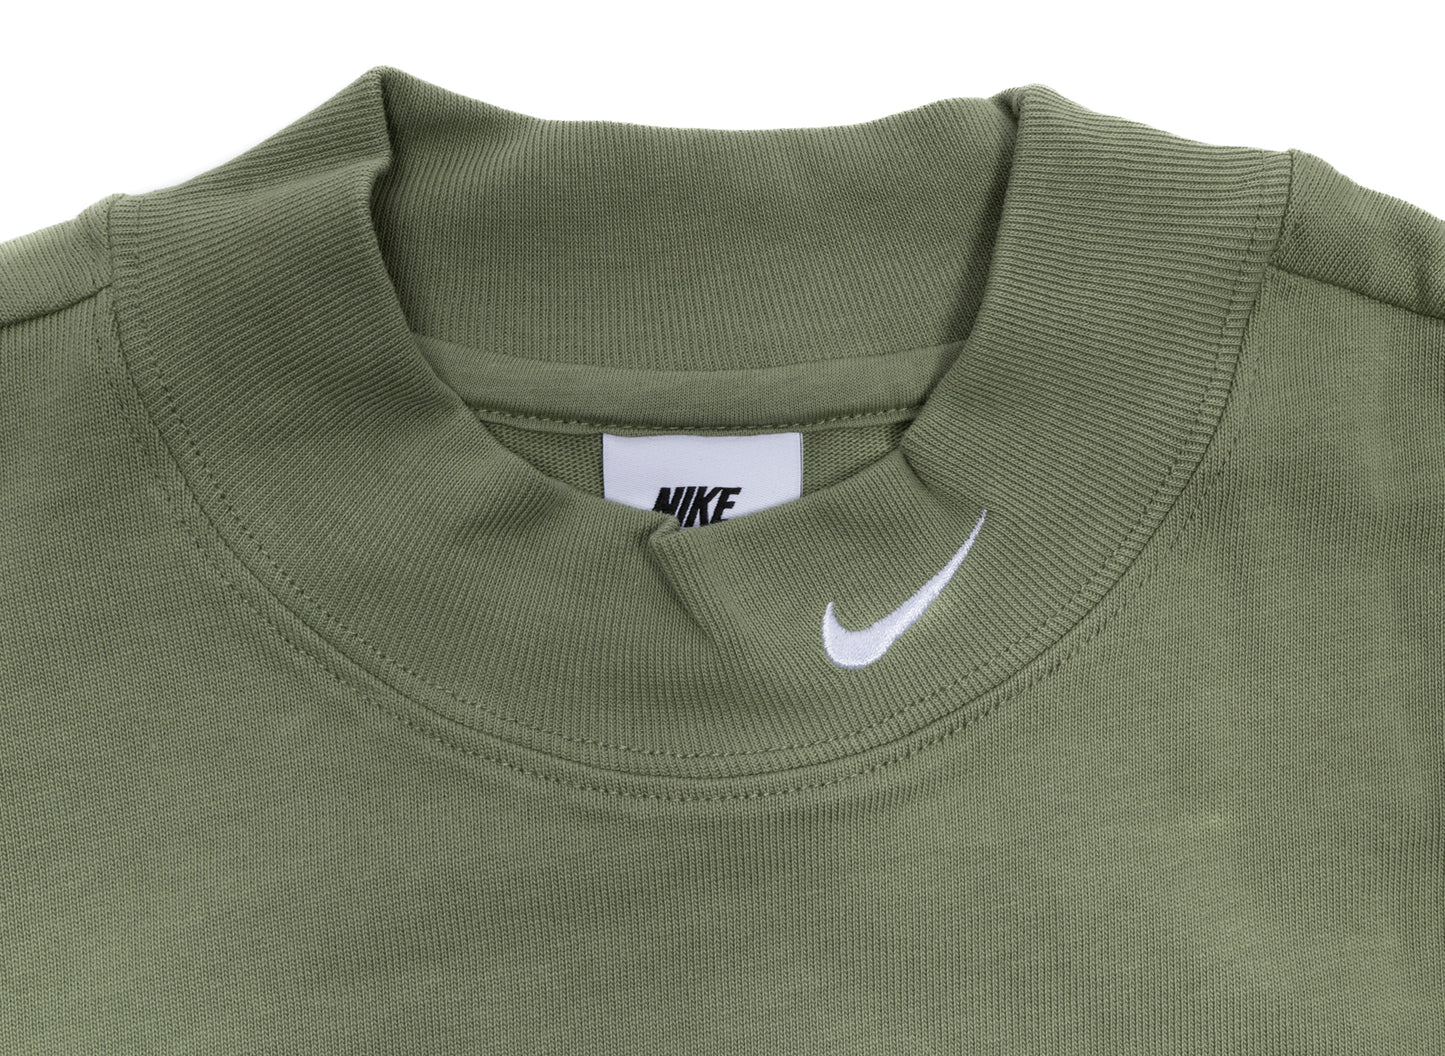 Nike Life Long Sleeve Mock Neck Shirt in Oil Green